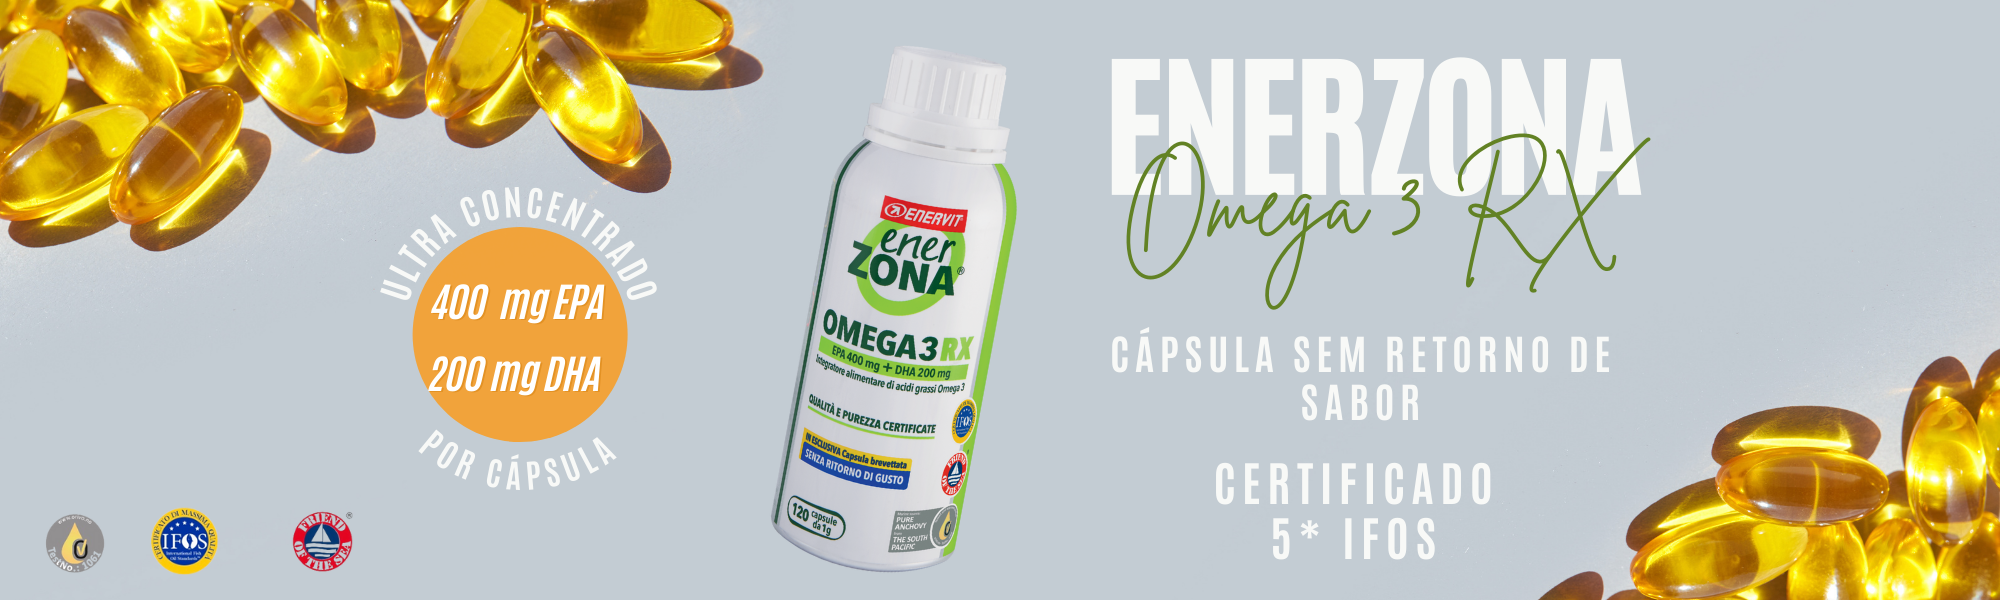 https://vivasaudavel.pt/es/enerzona/1672-enerzona-omega-3-rx-1000mg-120-caps.html